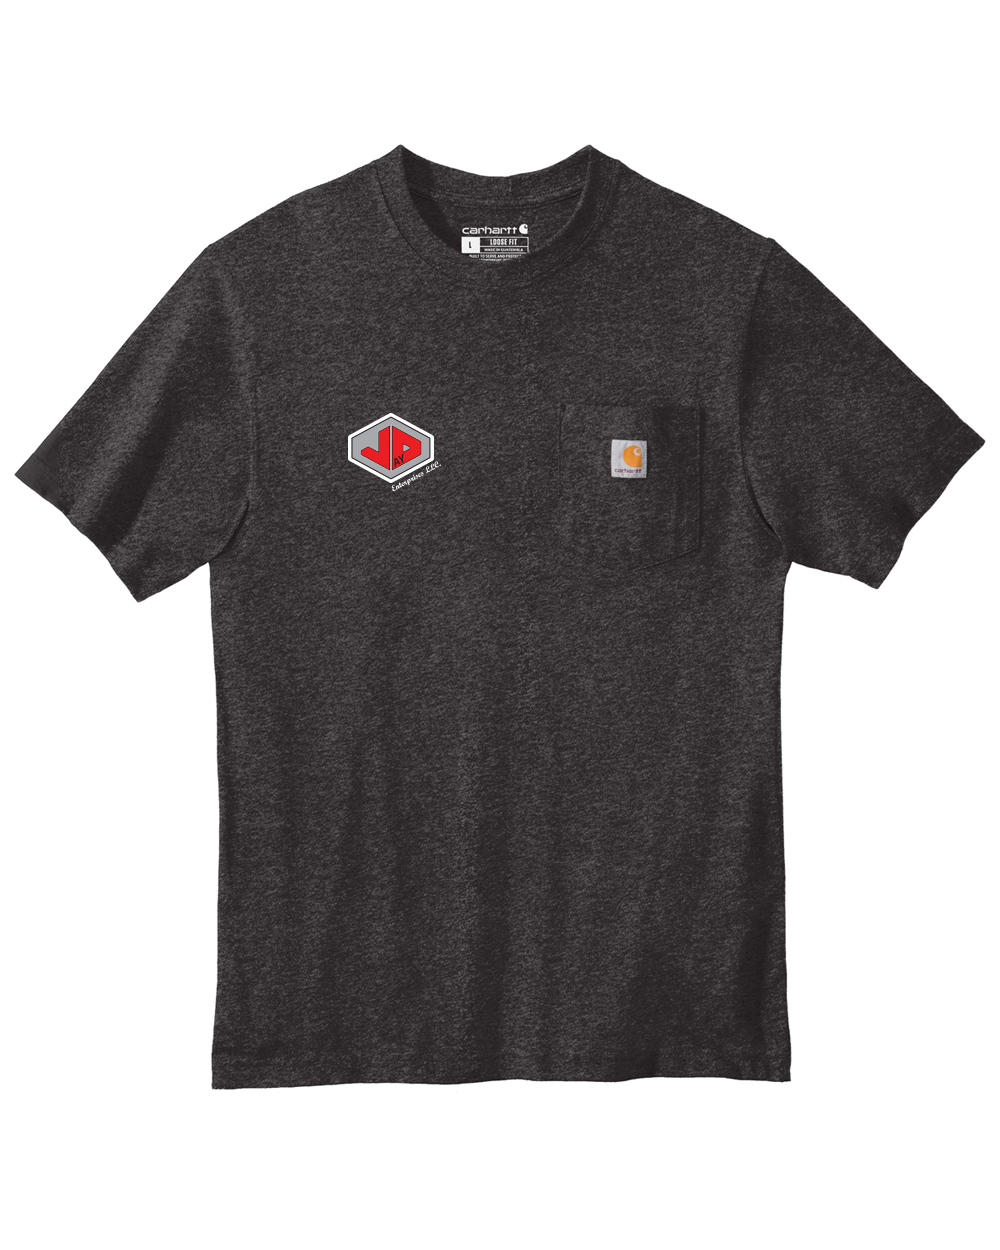 Jay D Enterprises - Carhartt Workwear Pocket Short Sleeve T-Shirt